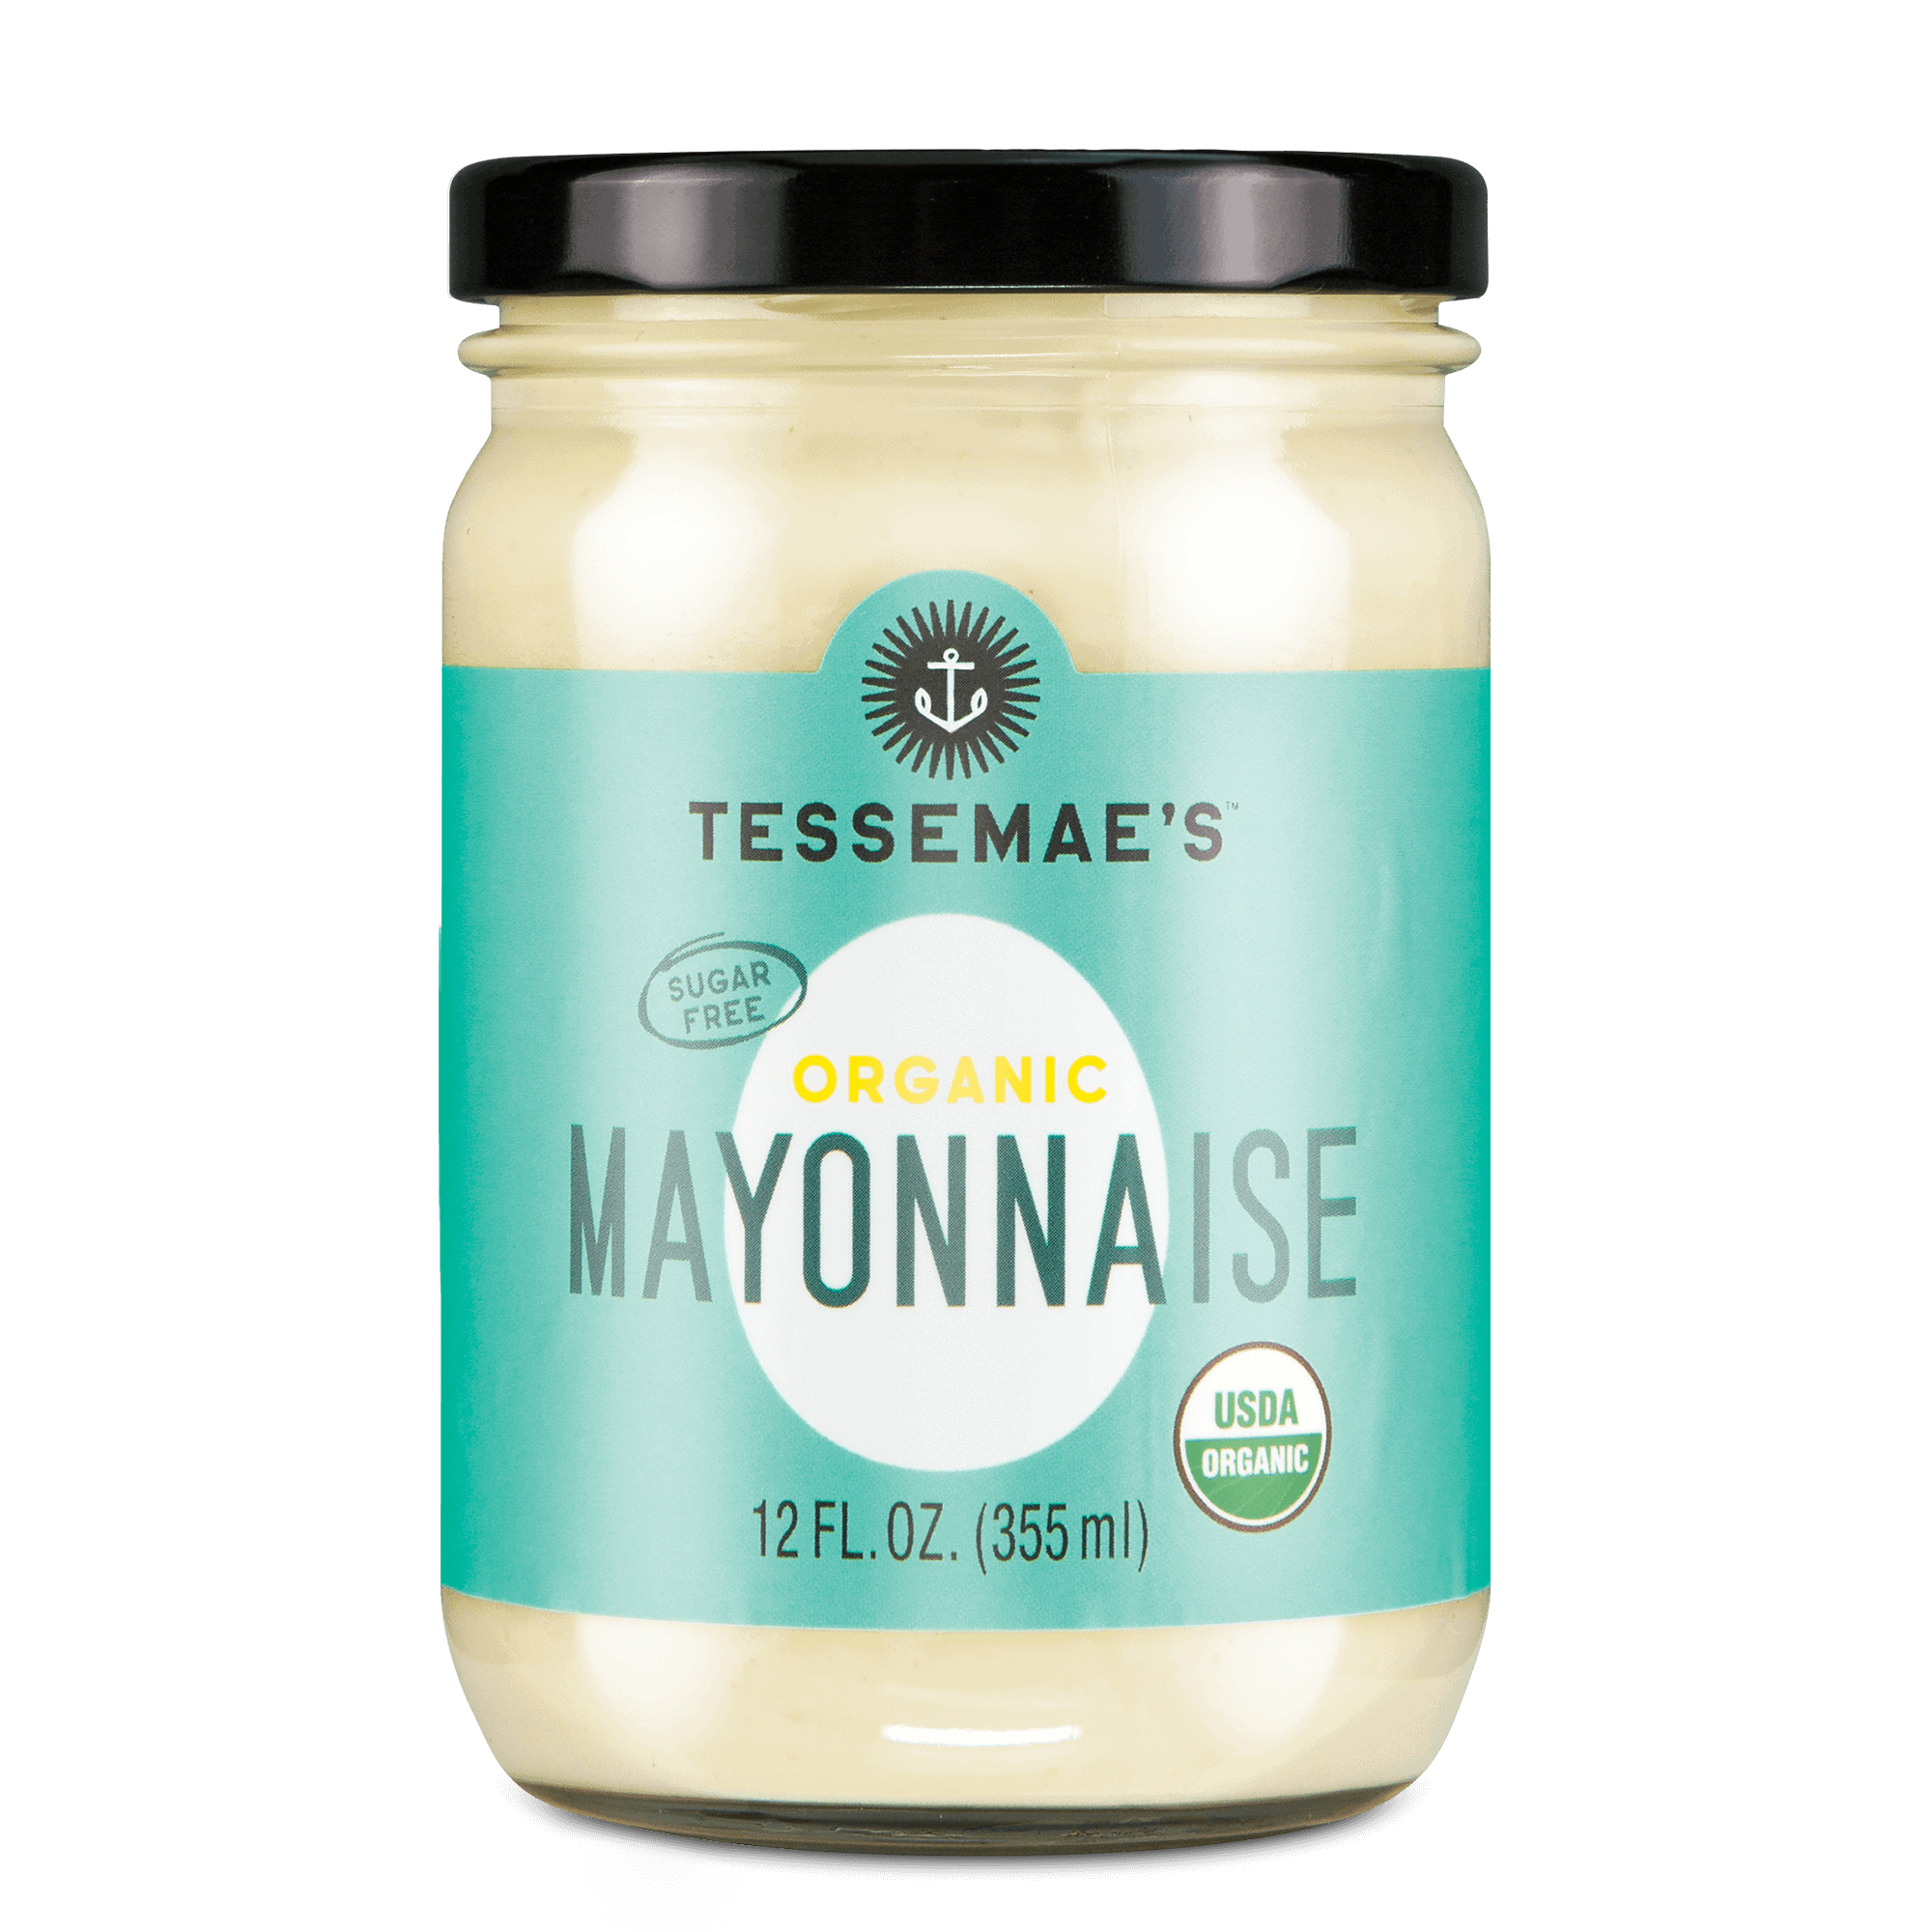 Tessemae's Organic Mayonnaise 6 units per case 12.0 oz